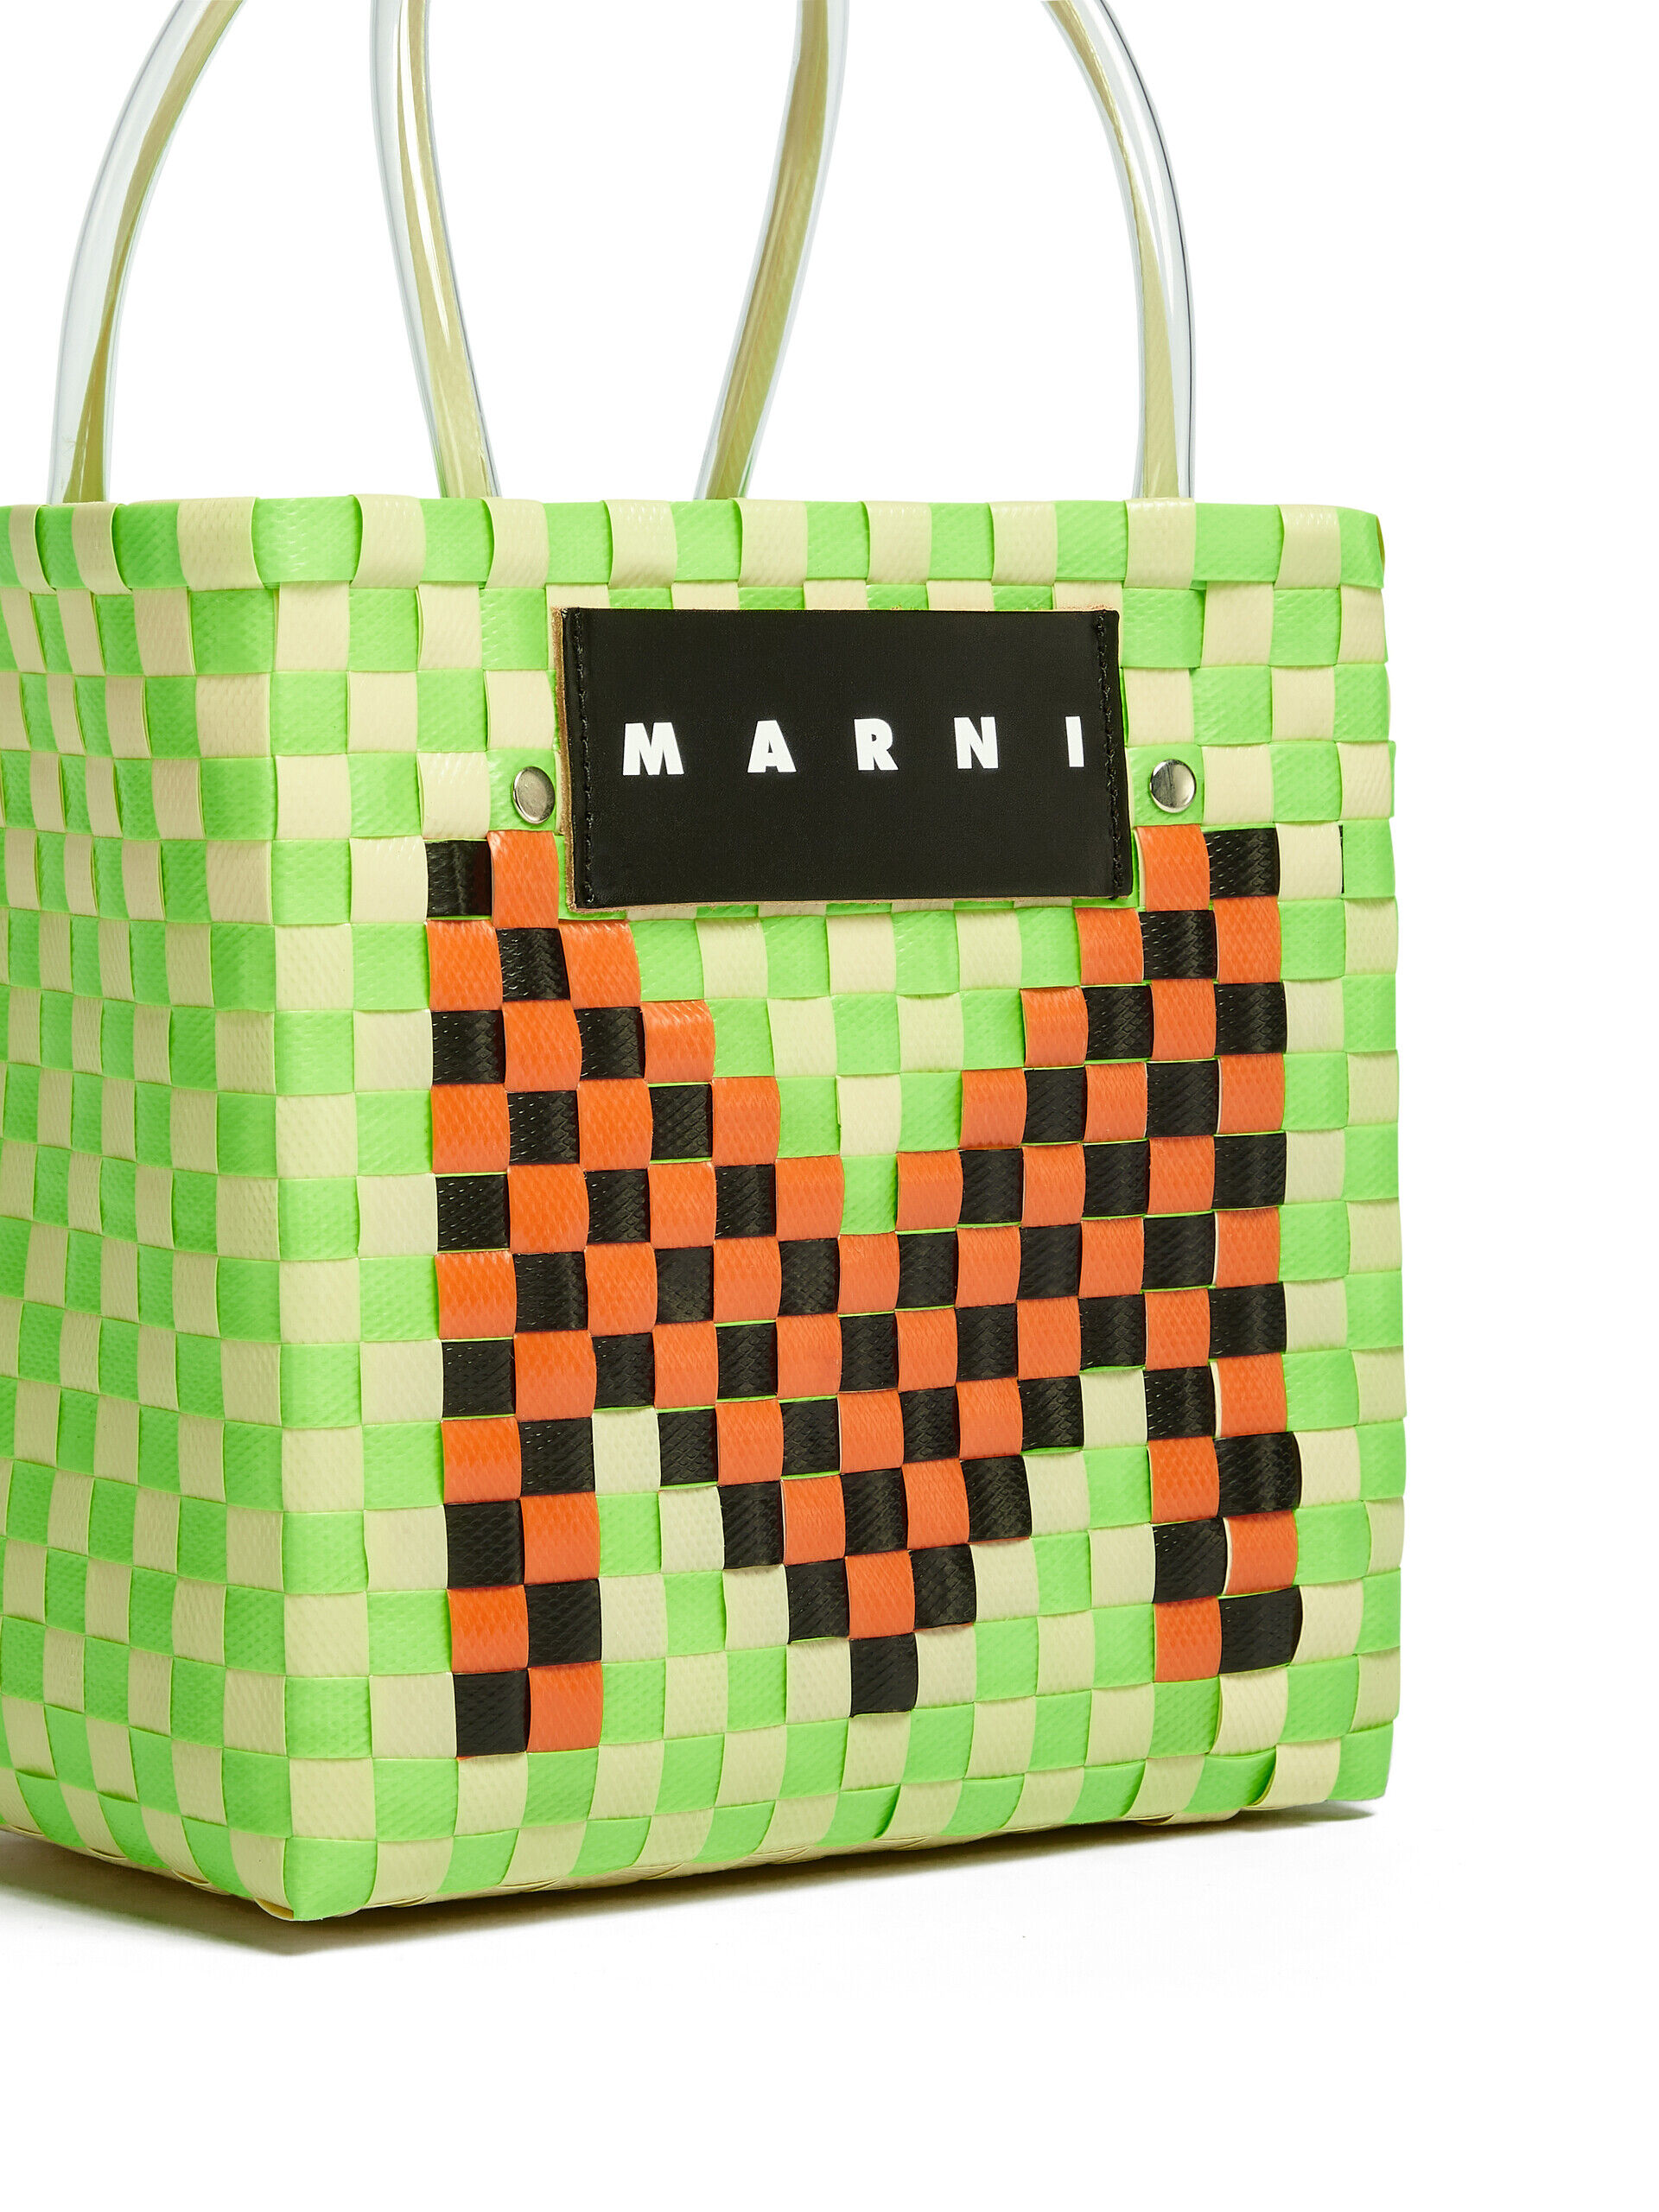 MARNI MARKET shopping bag in green woven material with M logo | Marni